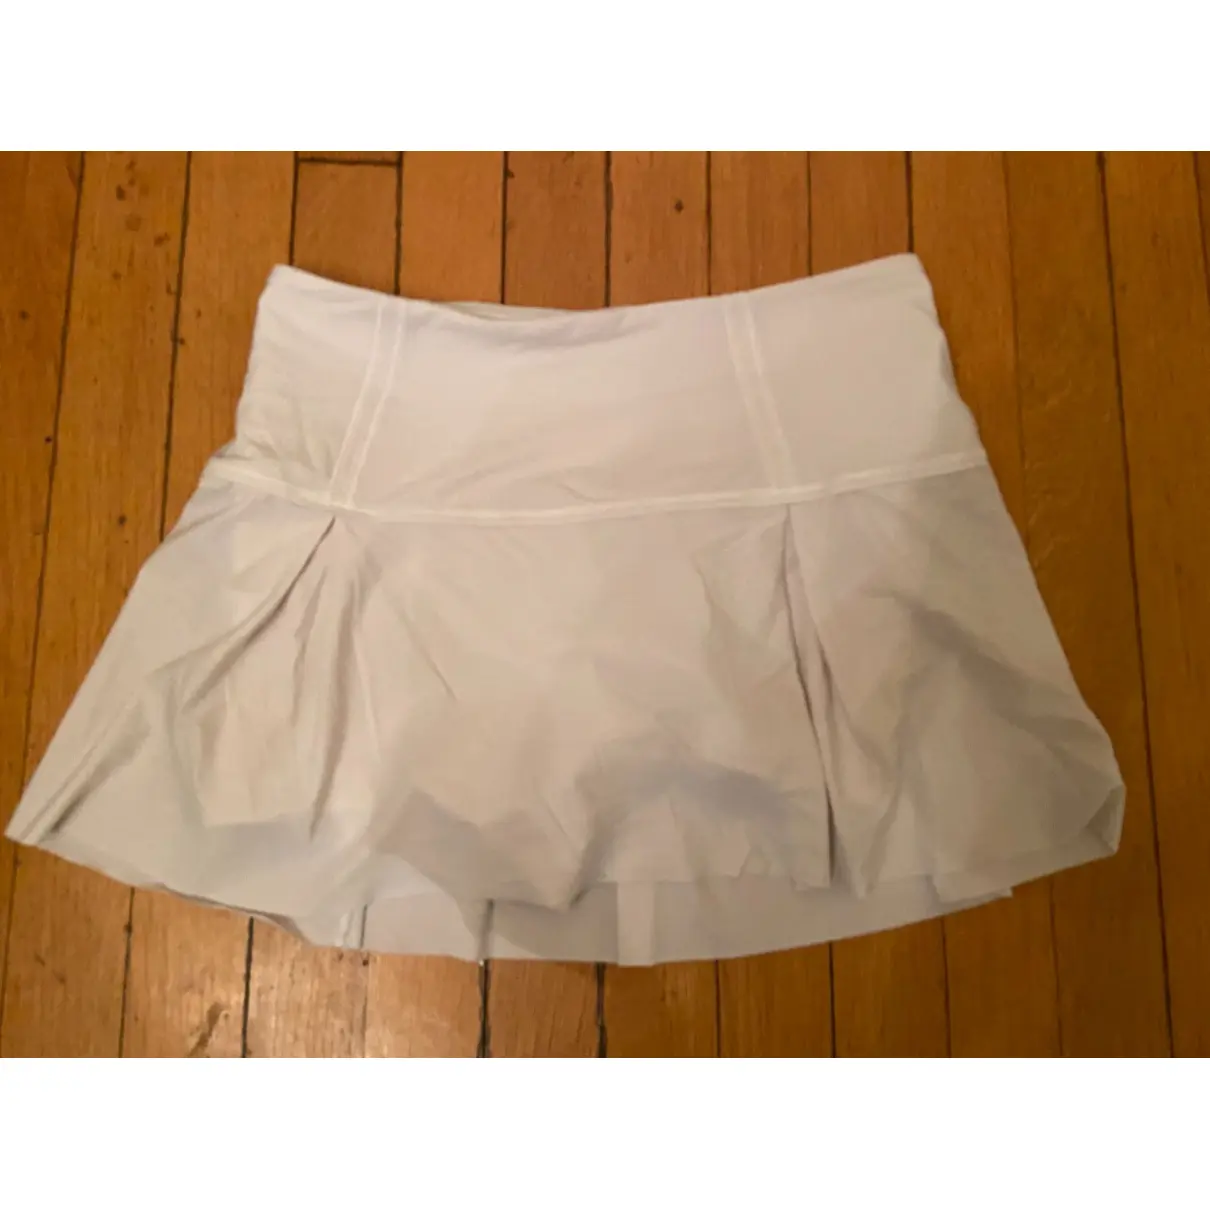 https://images.vestiairecollective.com/images/resized/w=1246,q=75,f=auto,/produit/white-not-specified-lululemon-skirt-27247442-3_1.jpg